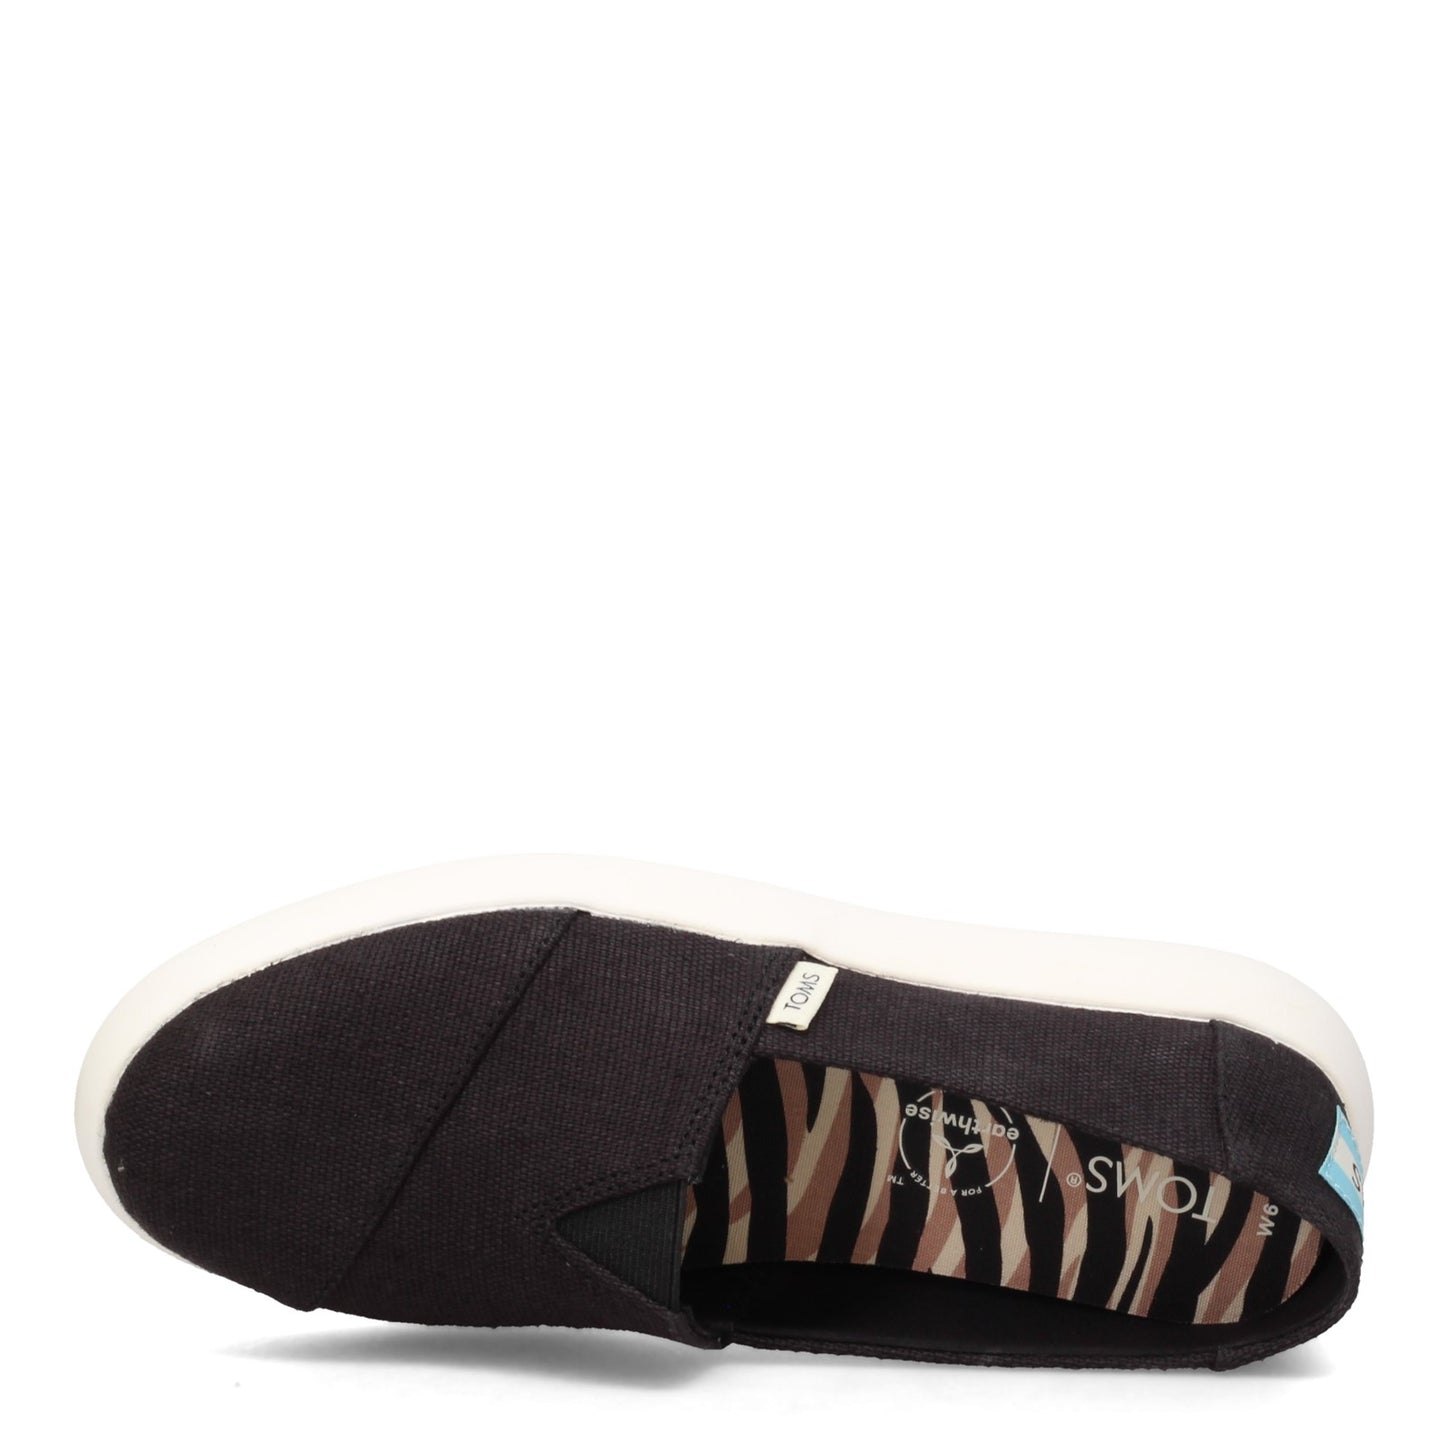 Peltz Shoes  Women's Toms Alpargata Mallow Slip-On BLACK 10016732